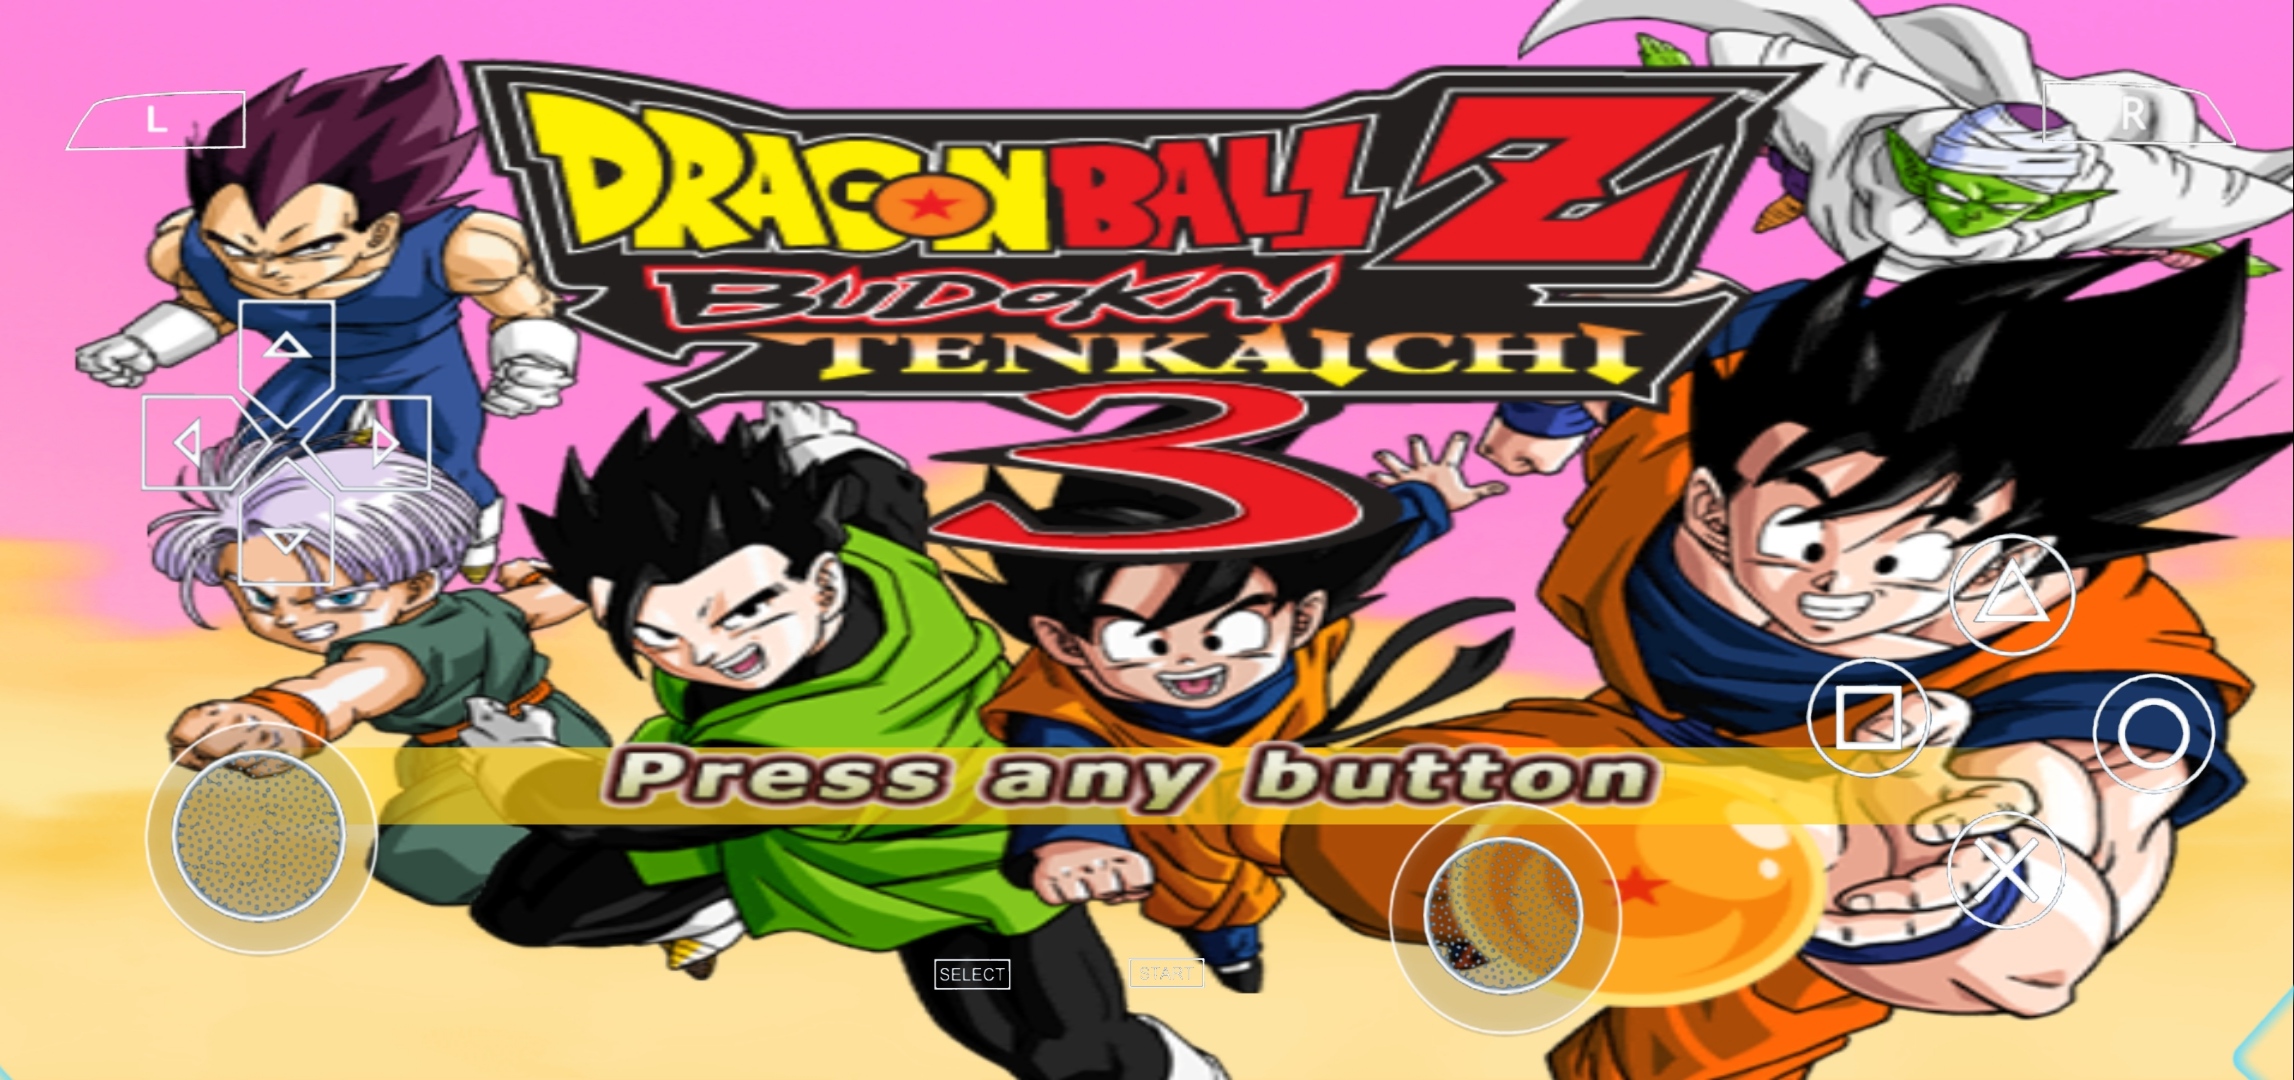 Dragon Ball Z Budokai Tenkaichi 3 ISO SUPER VS AF V2 - Main Menu and  Overall View 